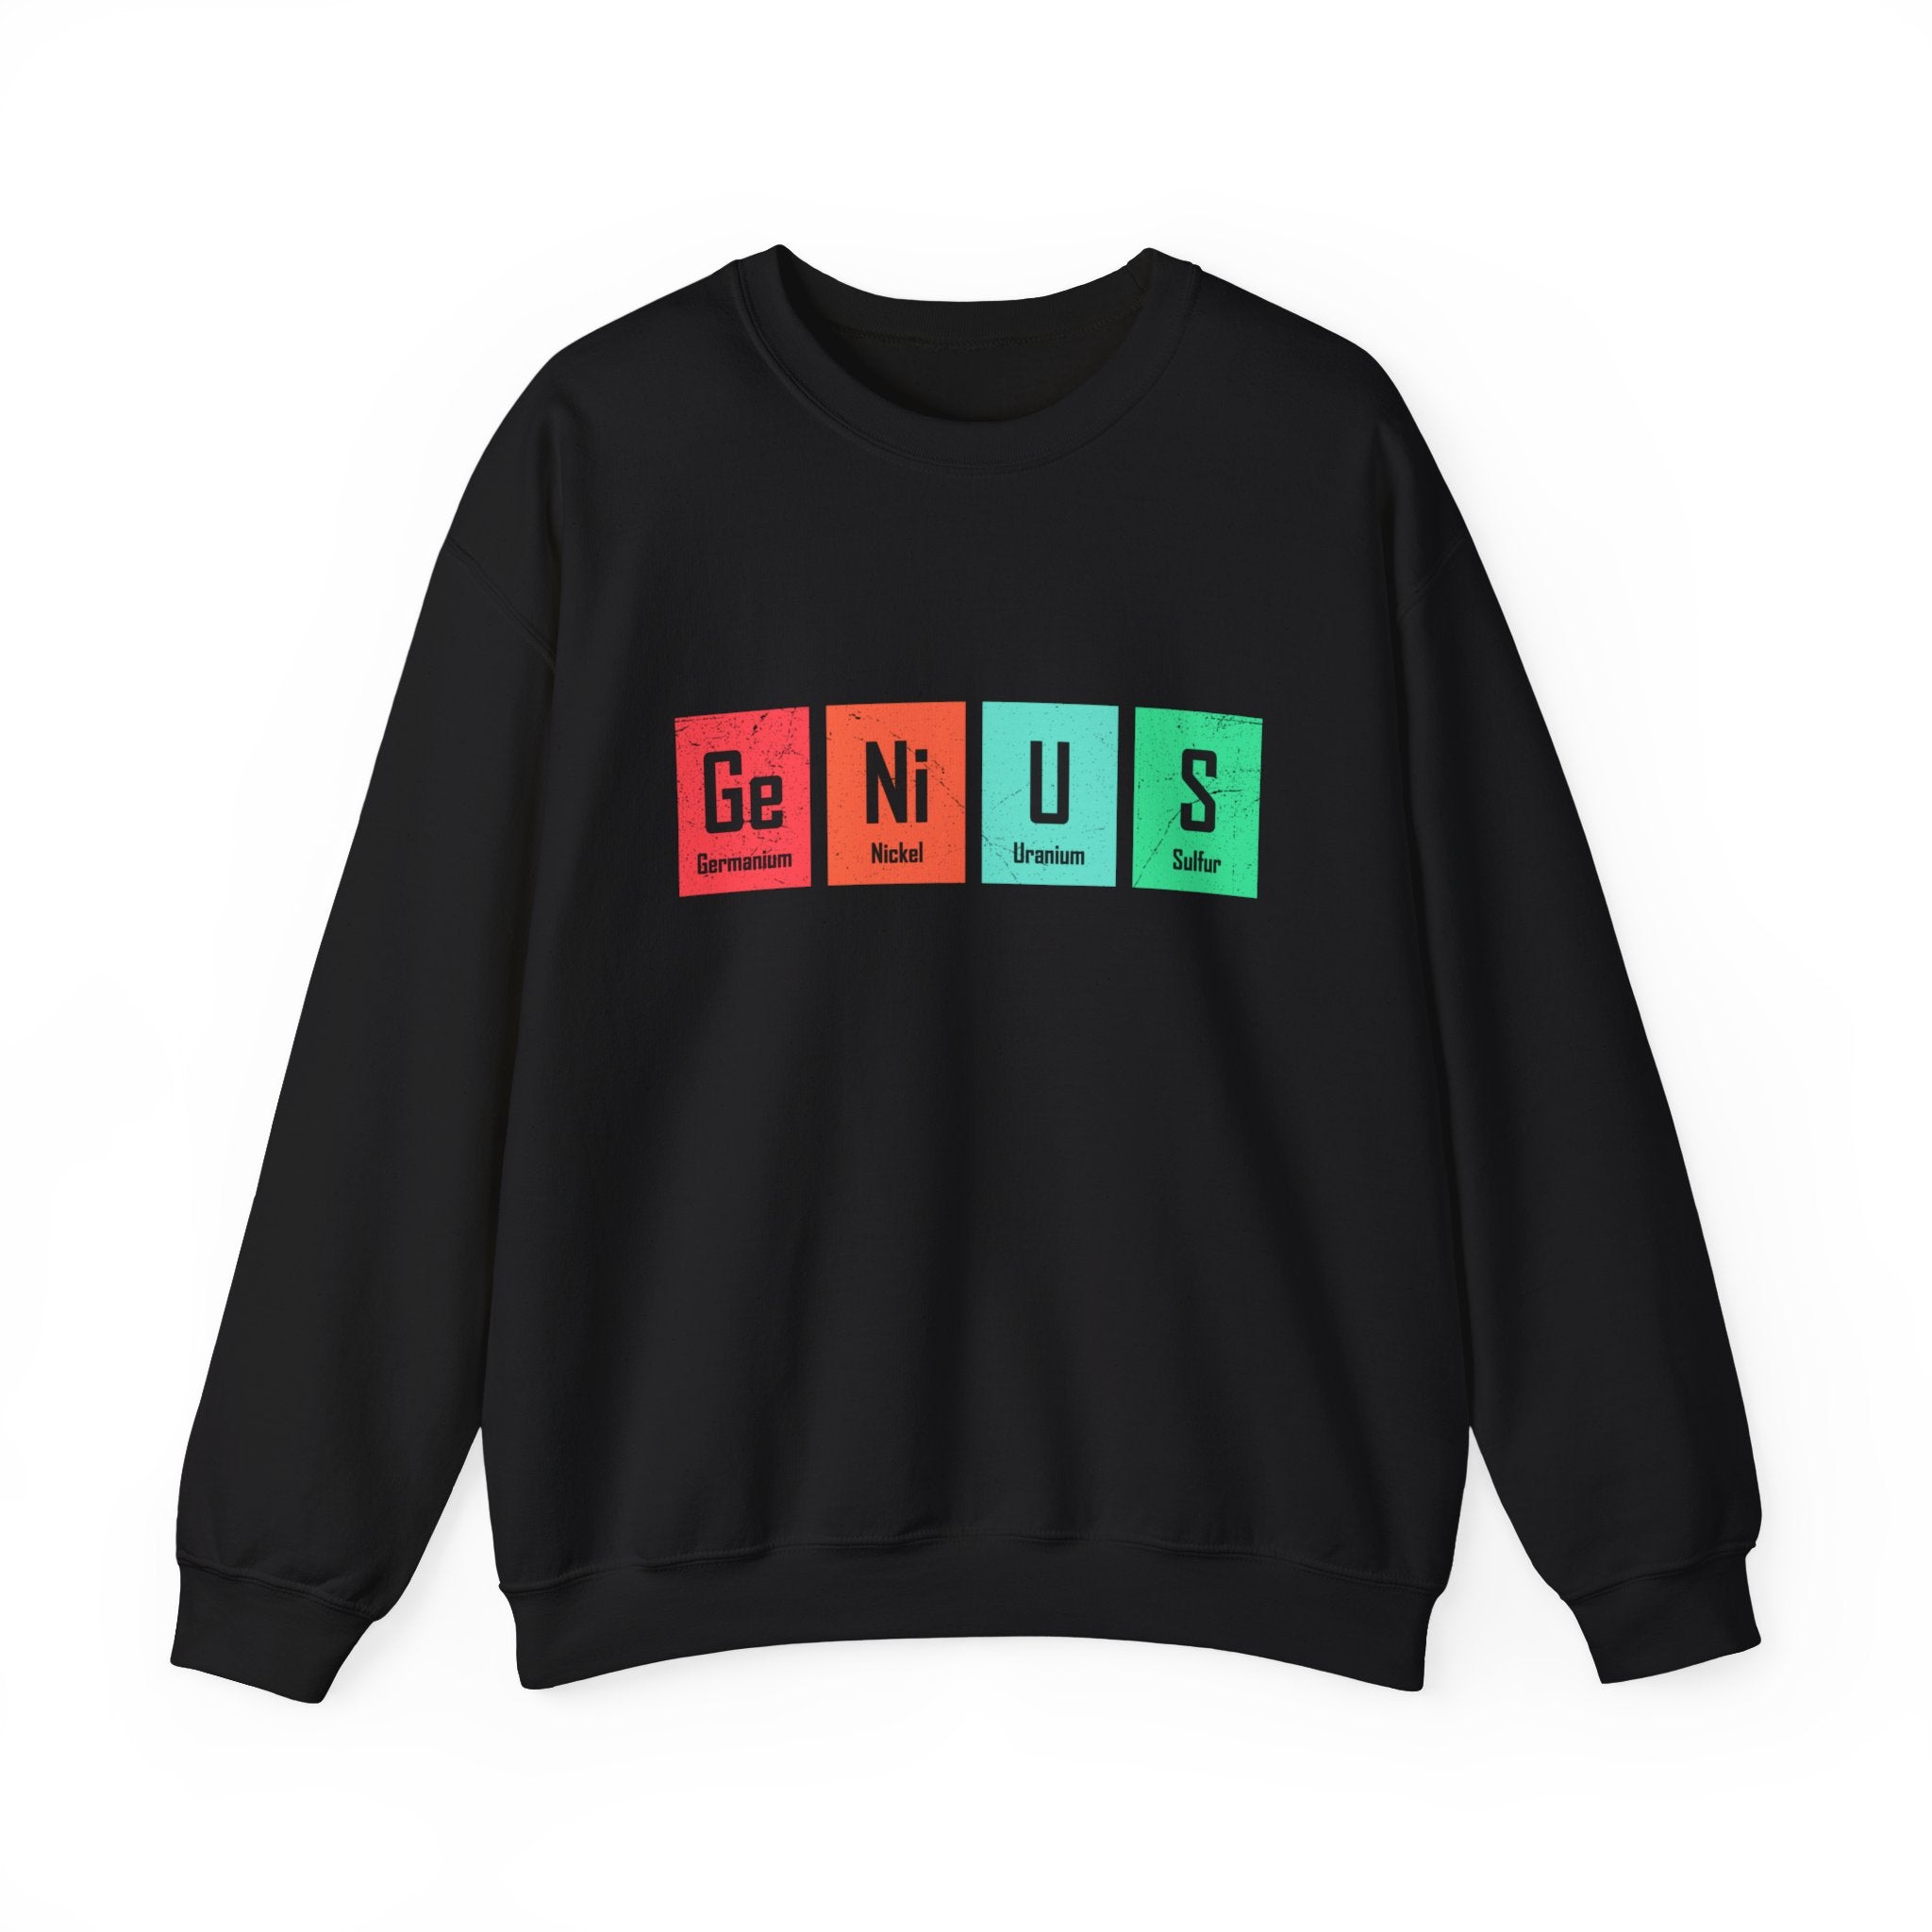 A Ge-Ni-U-S - Sweatshirt offering warmth and comfort, featuring a periodic table design that spells "Genius" using elements Germanium (Ge), Nickel (Ni), Uranium (U), and Sulfur (S).